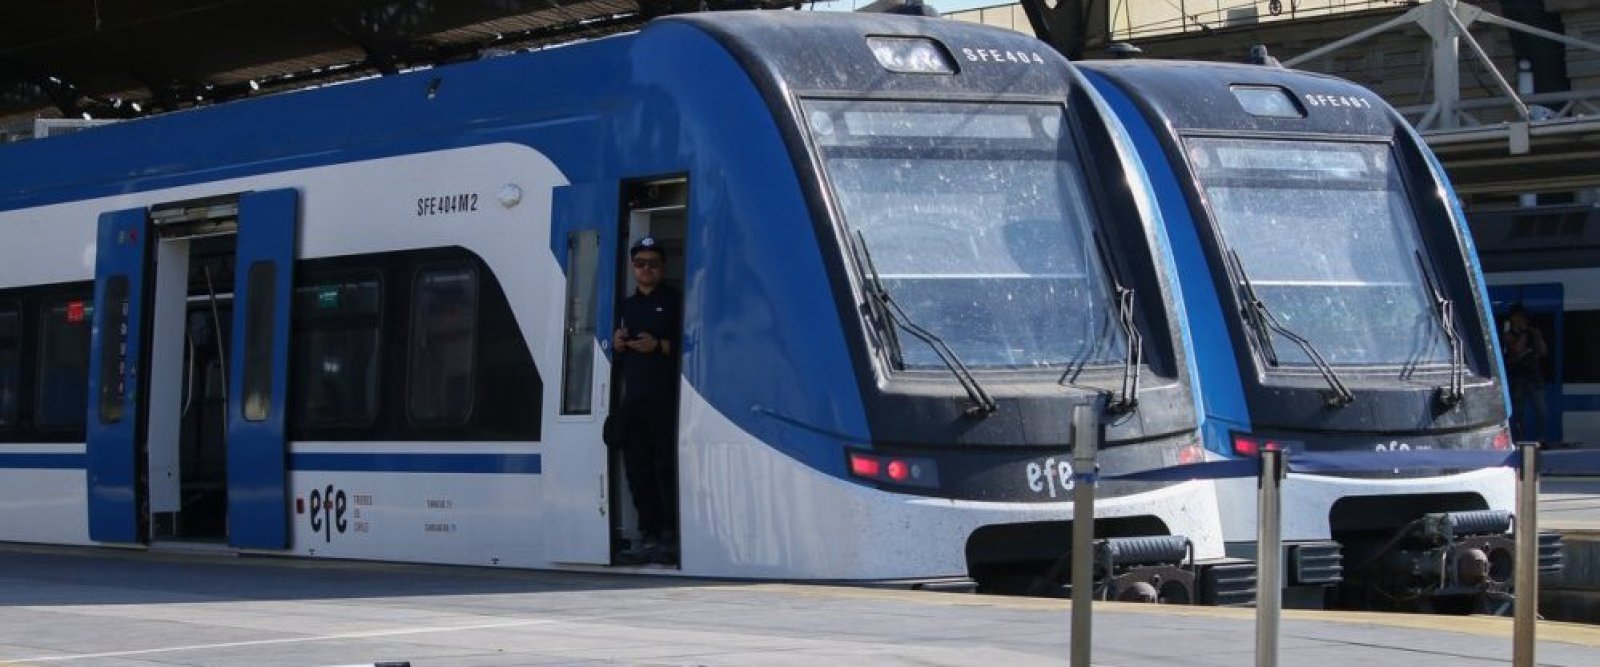 Inspeccionan avances en proyecto tren Santiago - Valparaíso: Licitación será en 2024